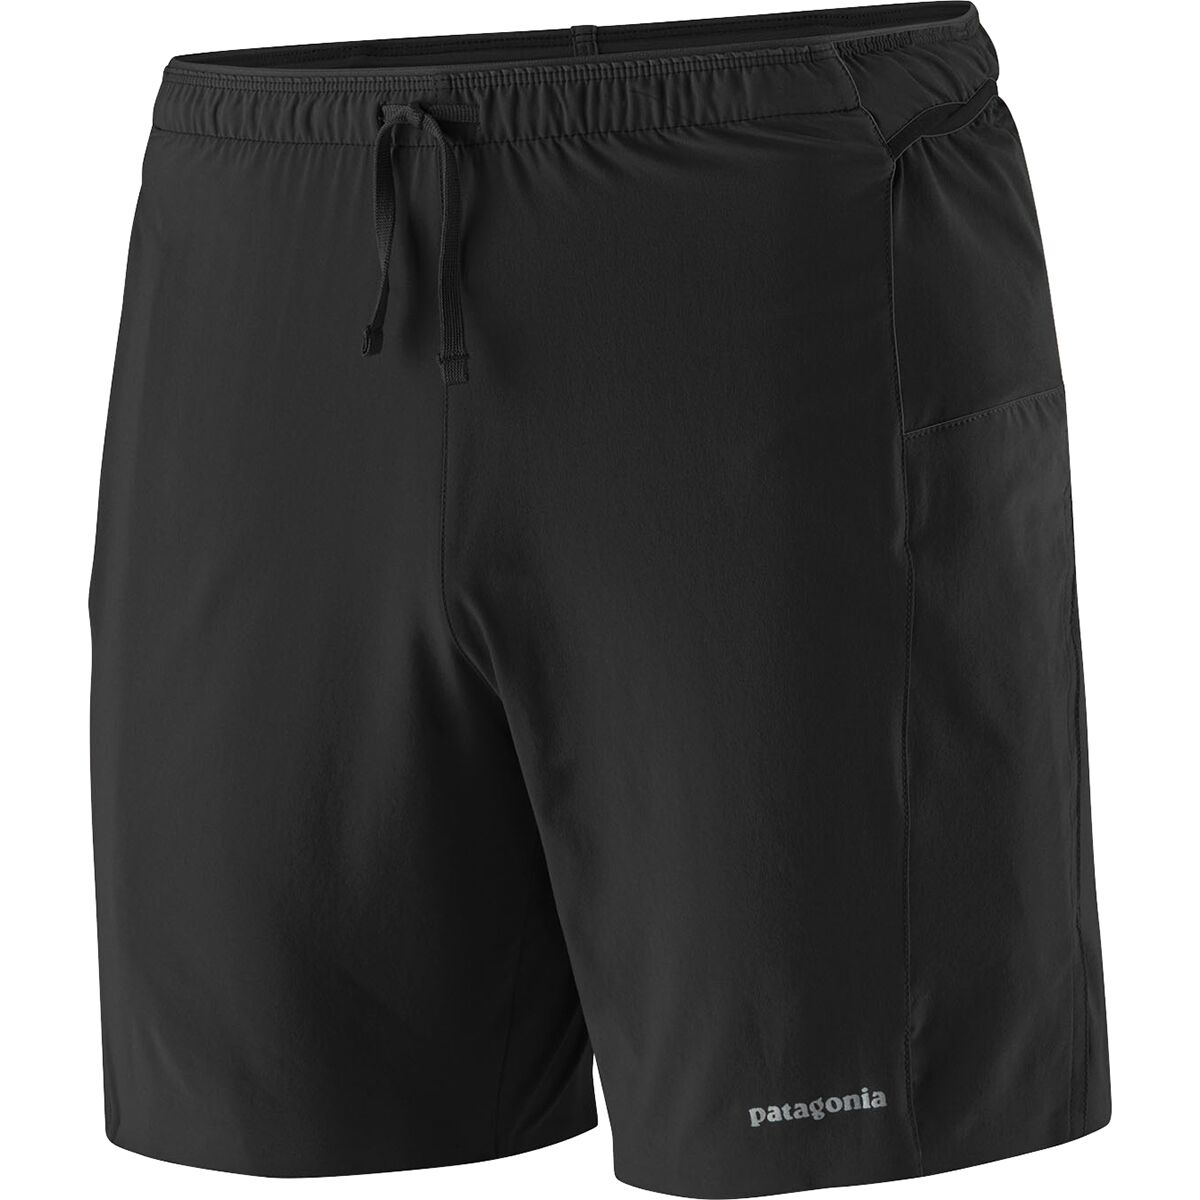 Patagonia Strider Pro 7in Shorts - Men's - Clothing